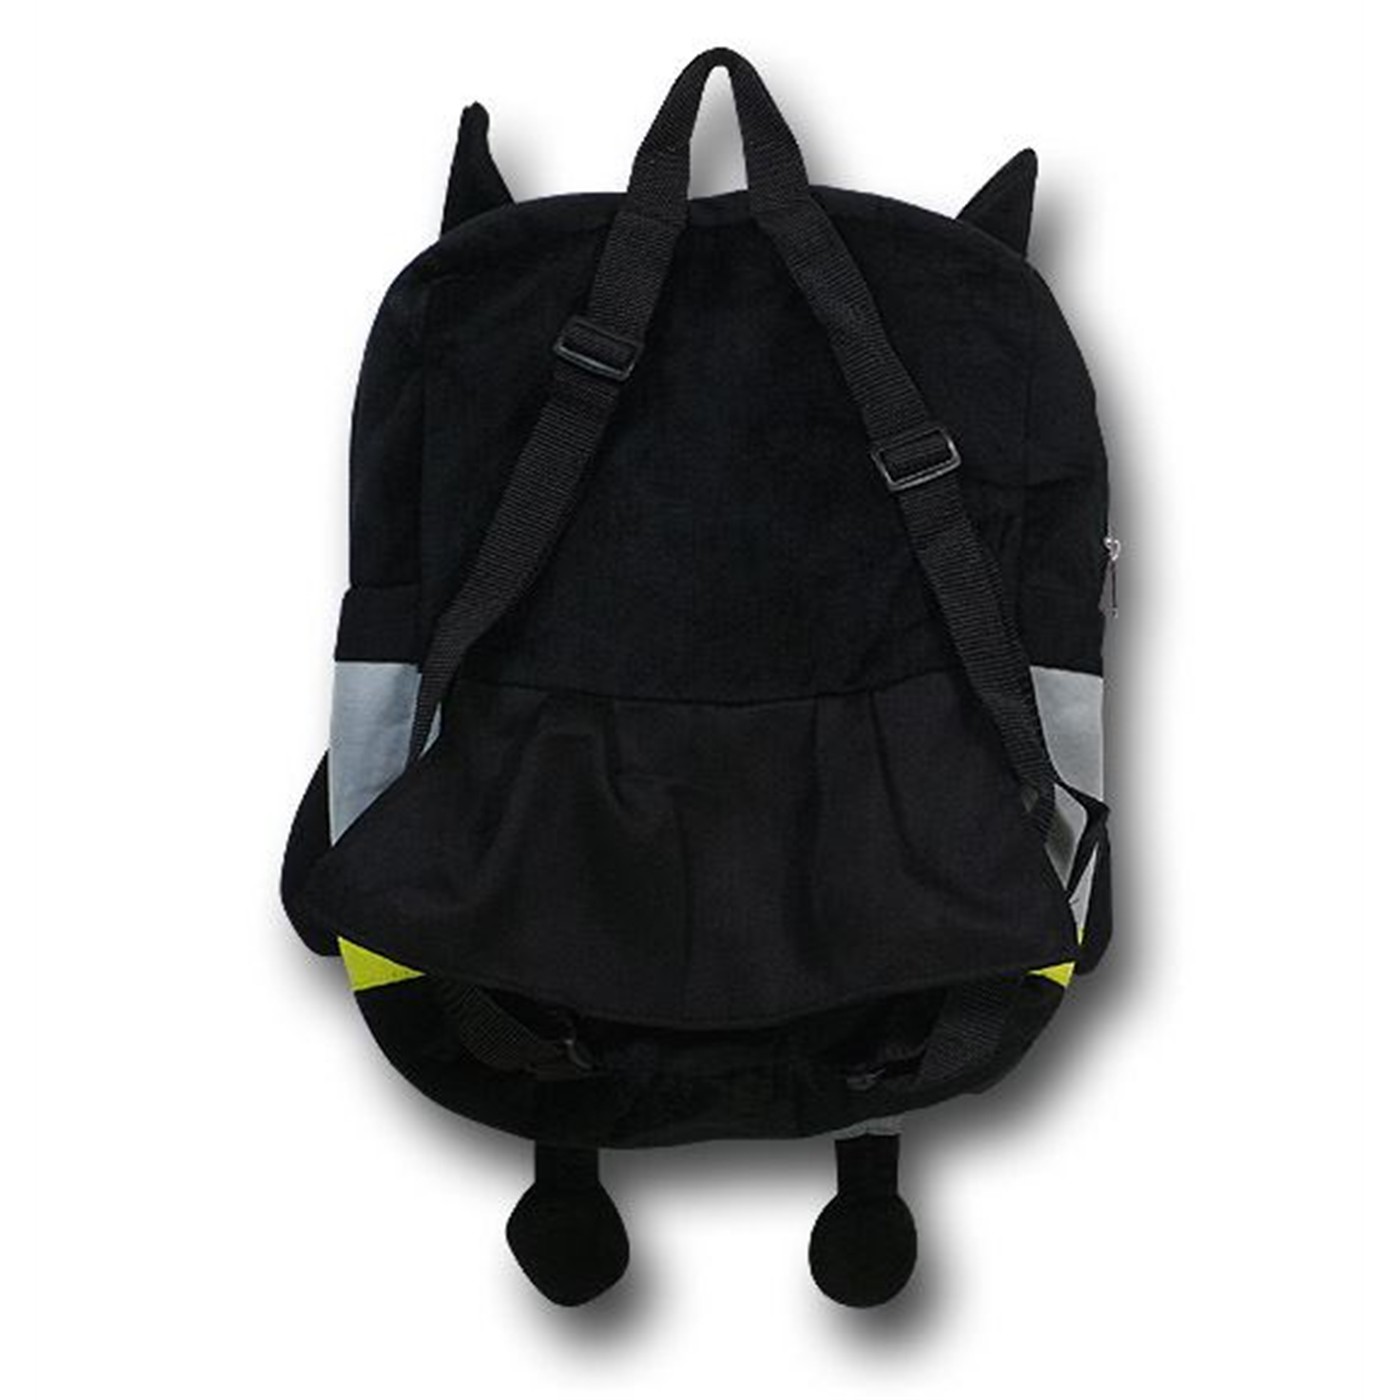 Batman Back Buddy Character Backpack